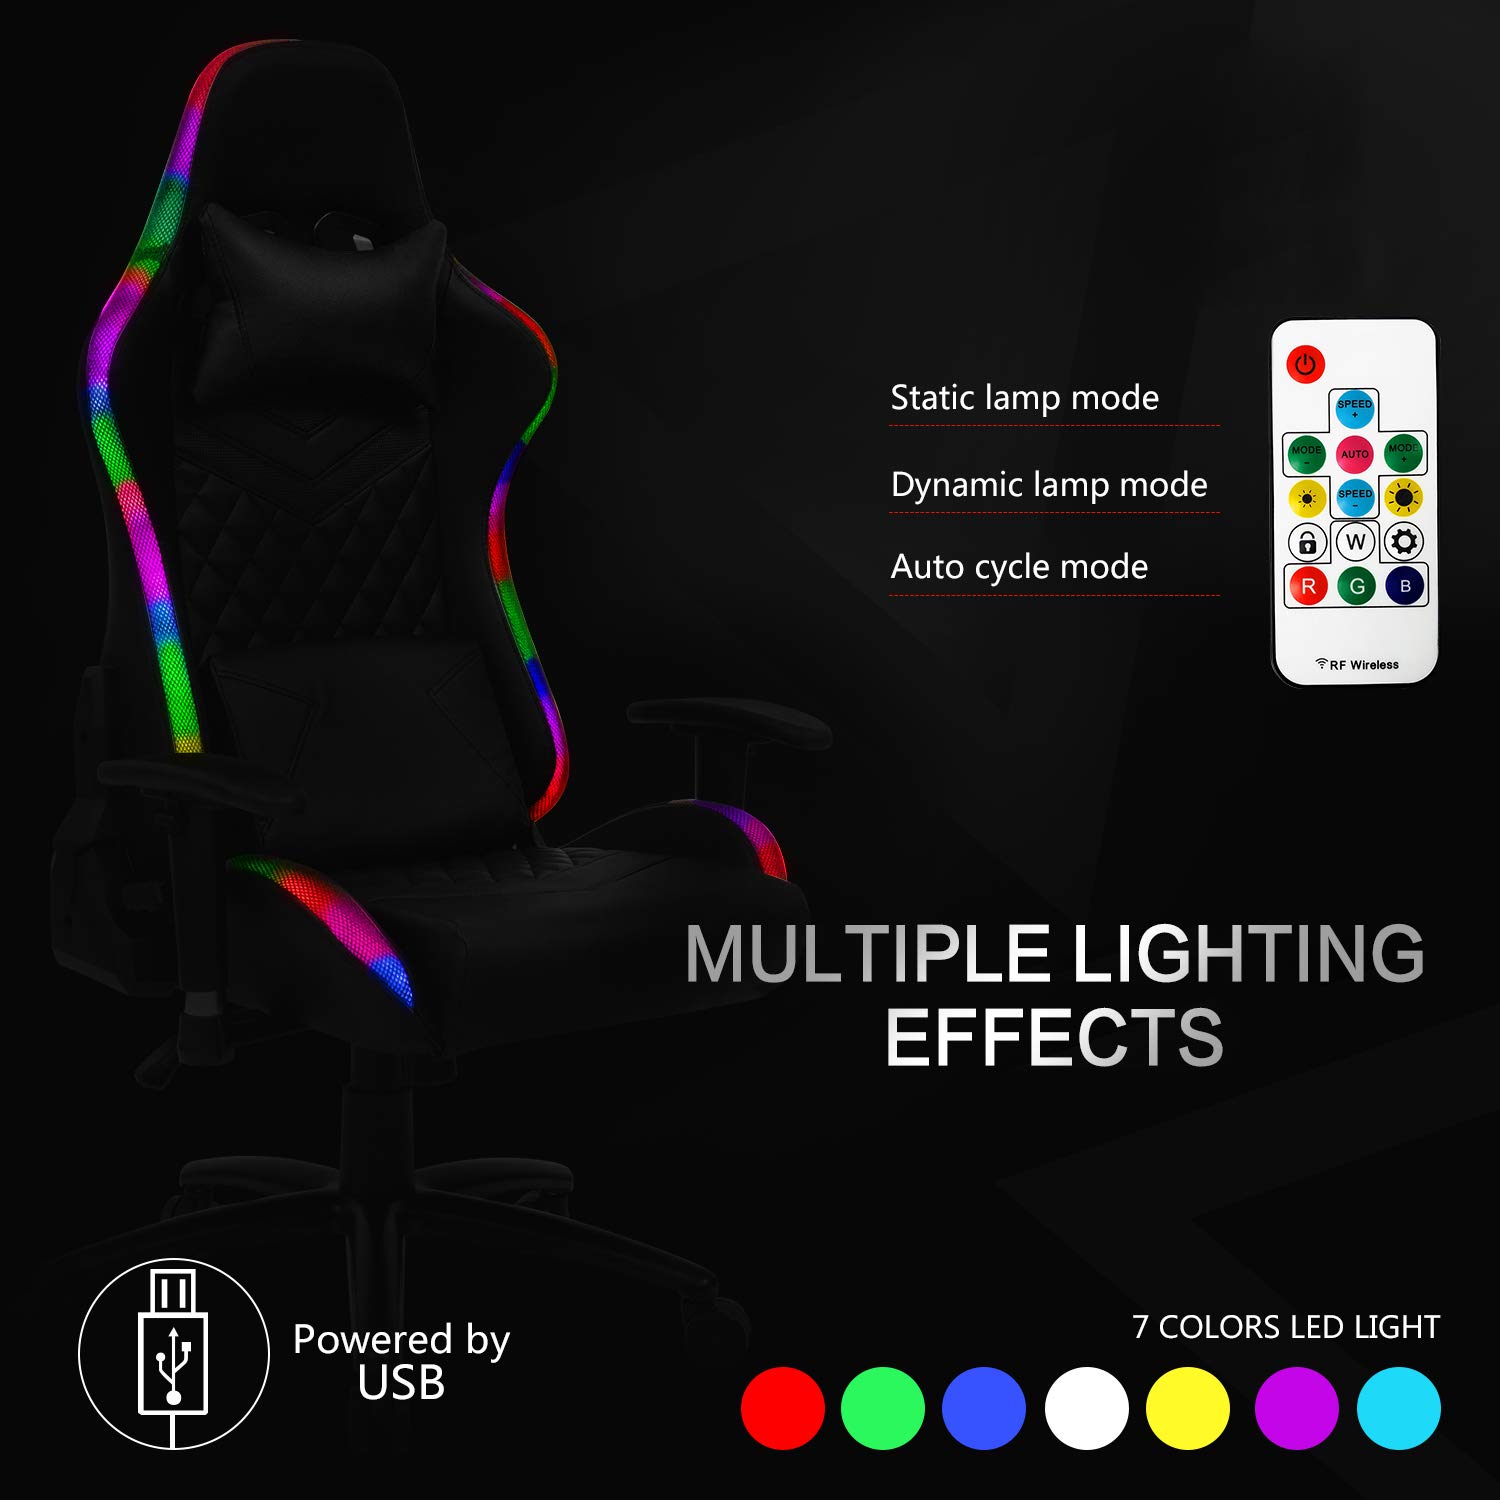 GEATIX-UT-B918 GEATIX UT-B918 Ergonomic RGB Gaming Chair GEATIX UT-B918 High-Back Ergonomic Gaming Chair with RGB LED Lights, Headrest, Lumbar Support, Height Adjustable Swivel Recliner Chair - BLACK 